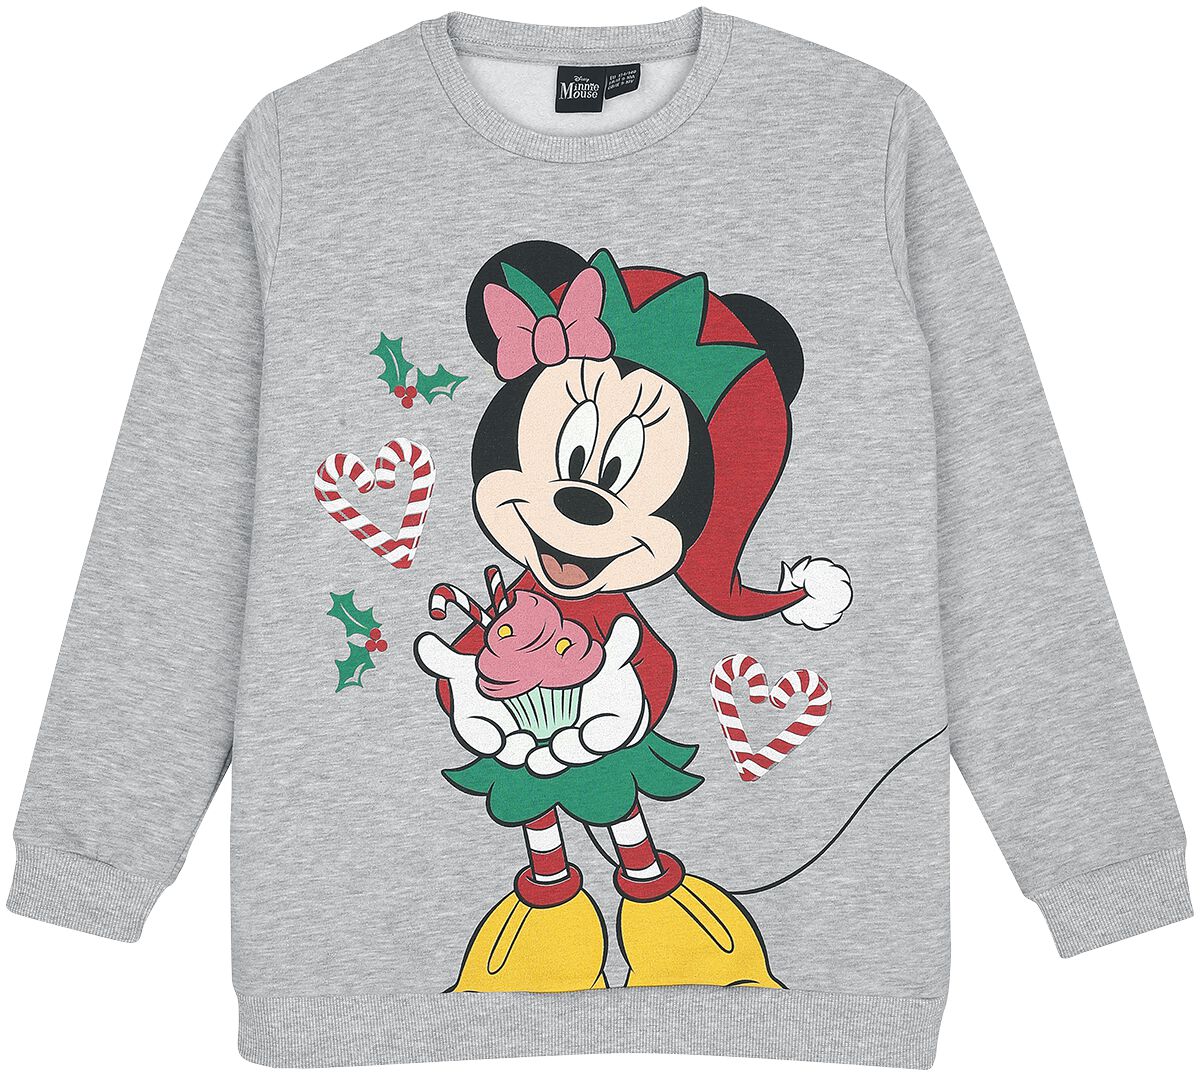 Mens Oversized Christmas Mickey Mouse Disney License T-Shirt - Black